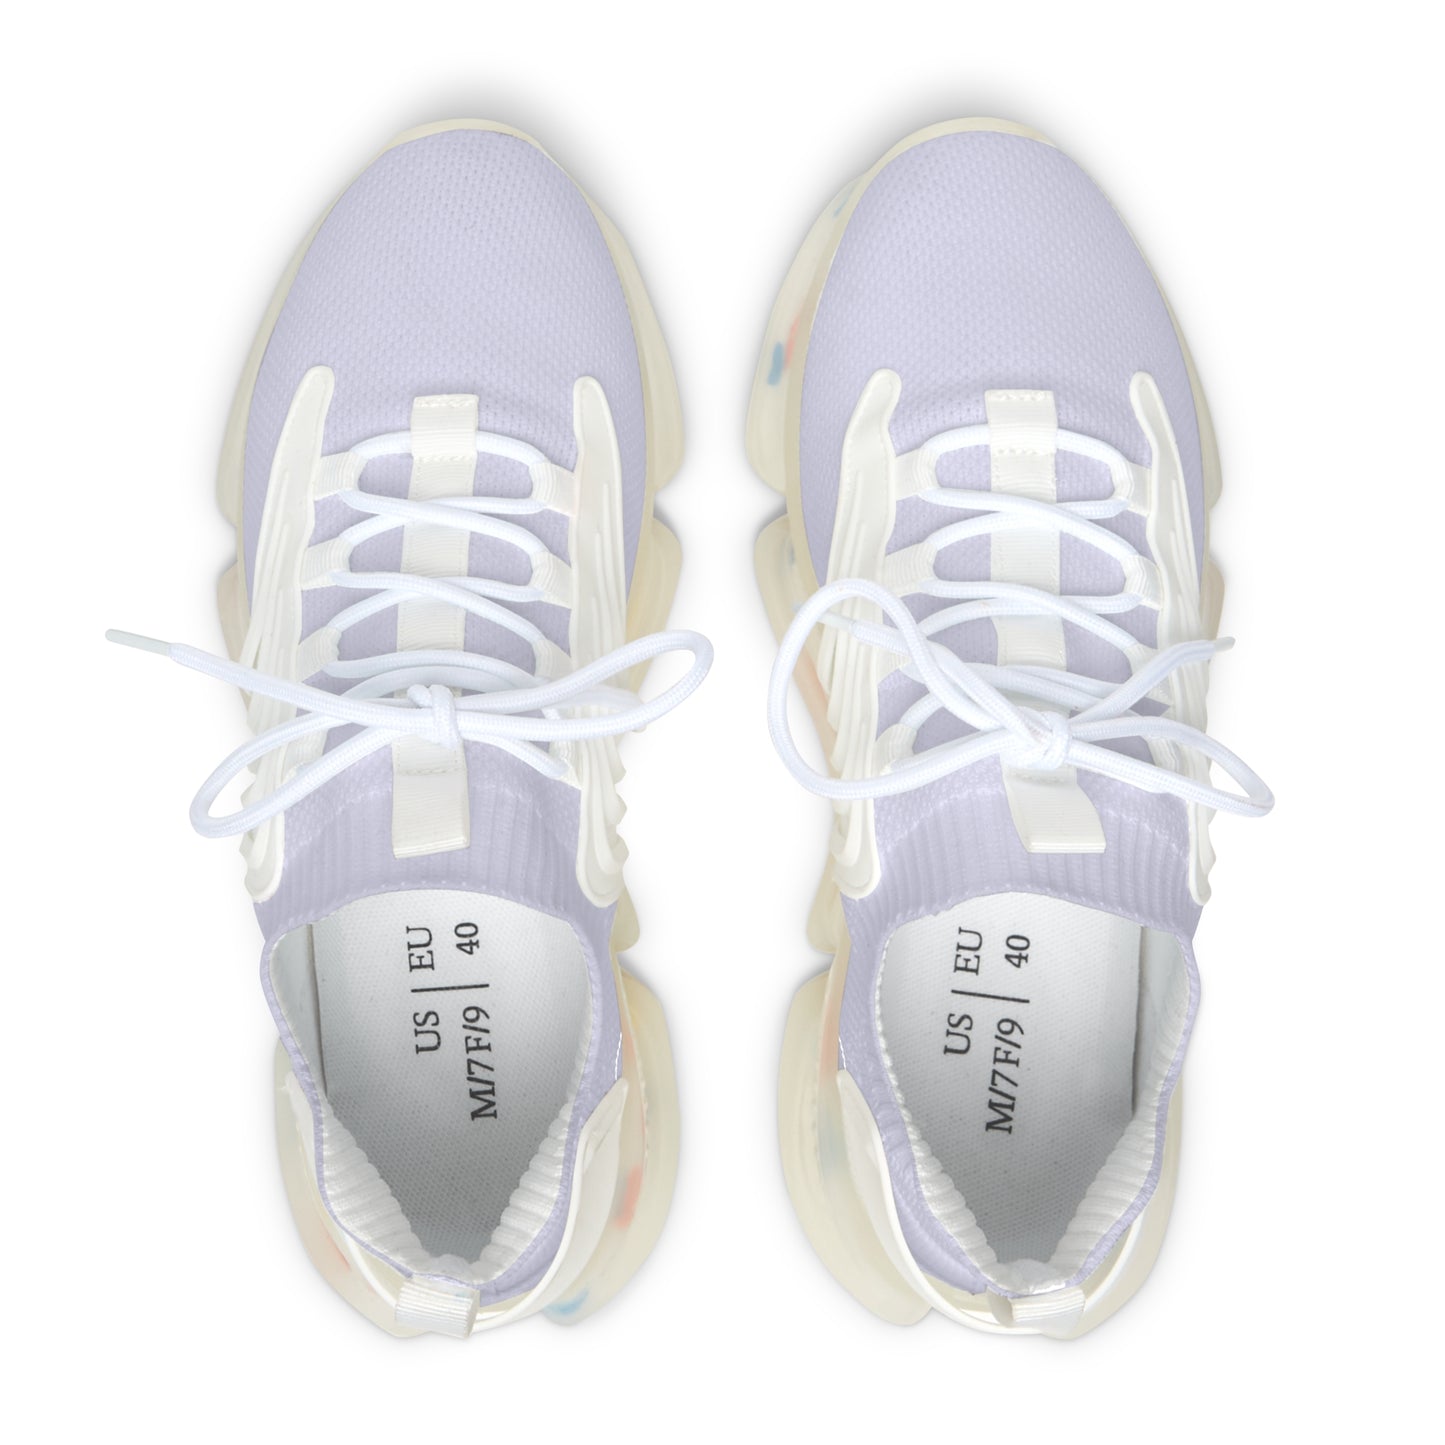 Lavender Women's Mesh Sneakers